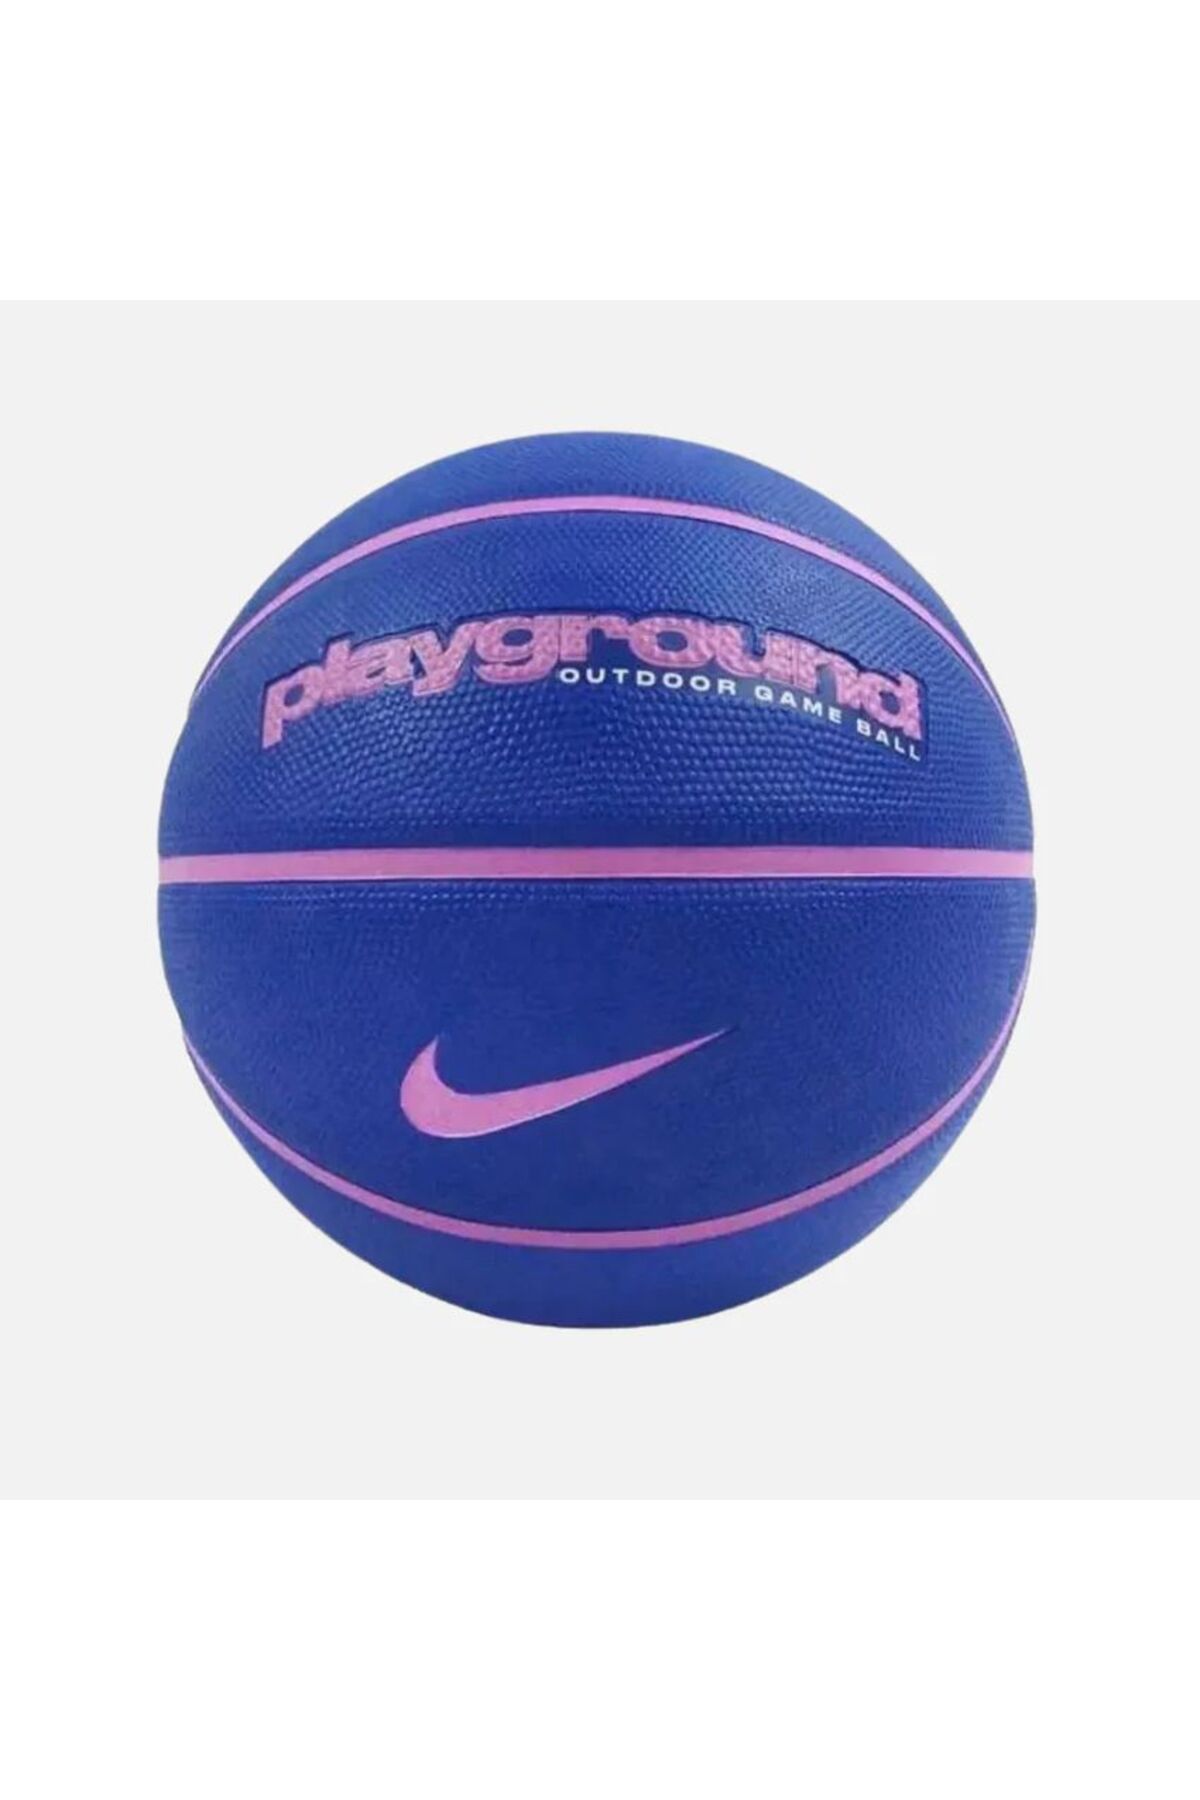 Nike Everyday Playground 8P Unisex Basketbol Topu N.100.4371.429.07